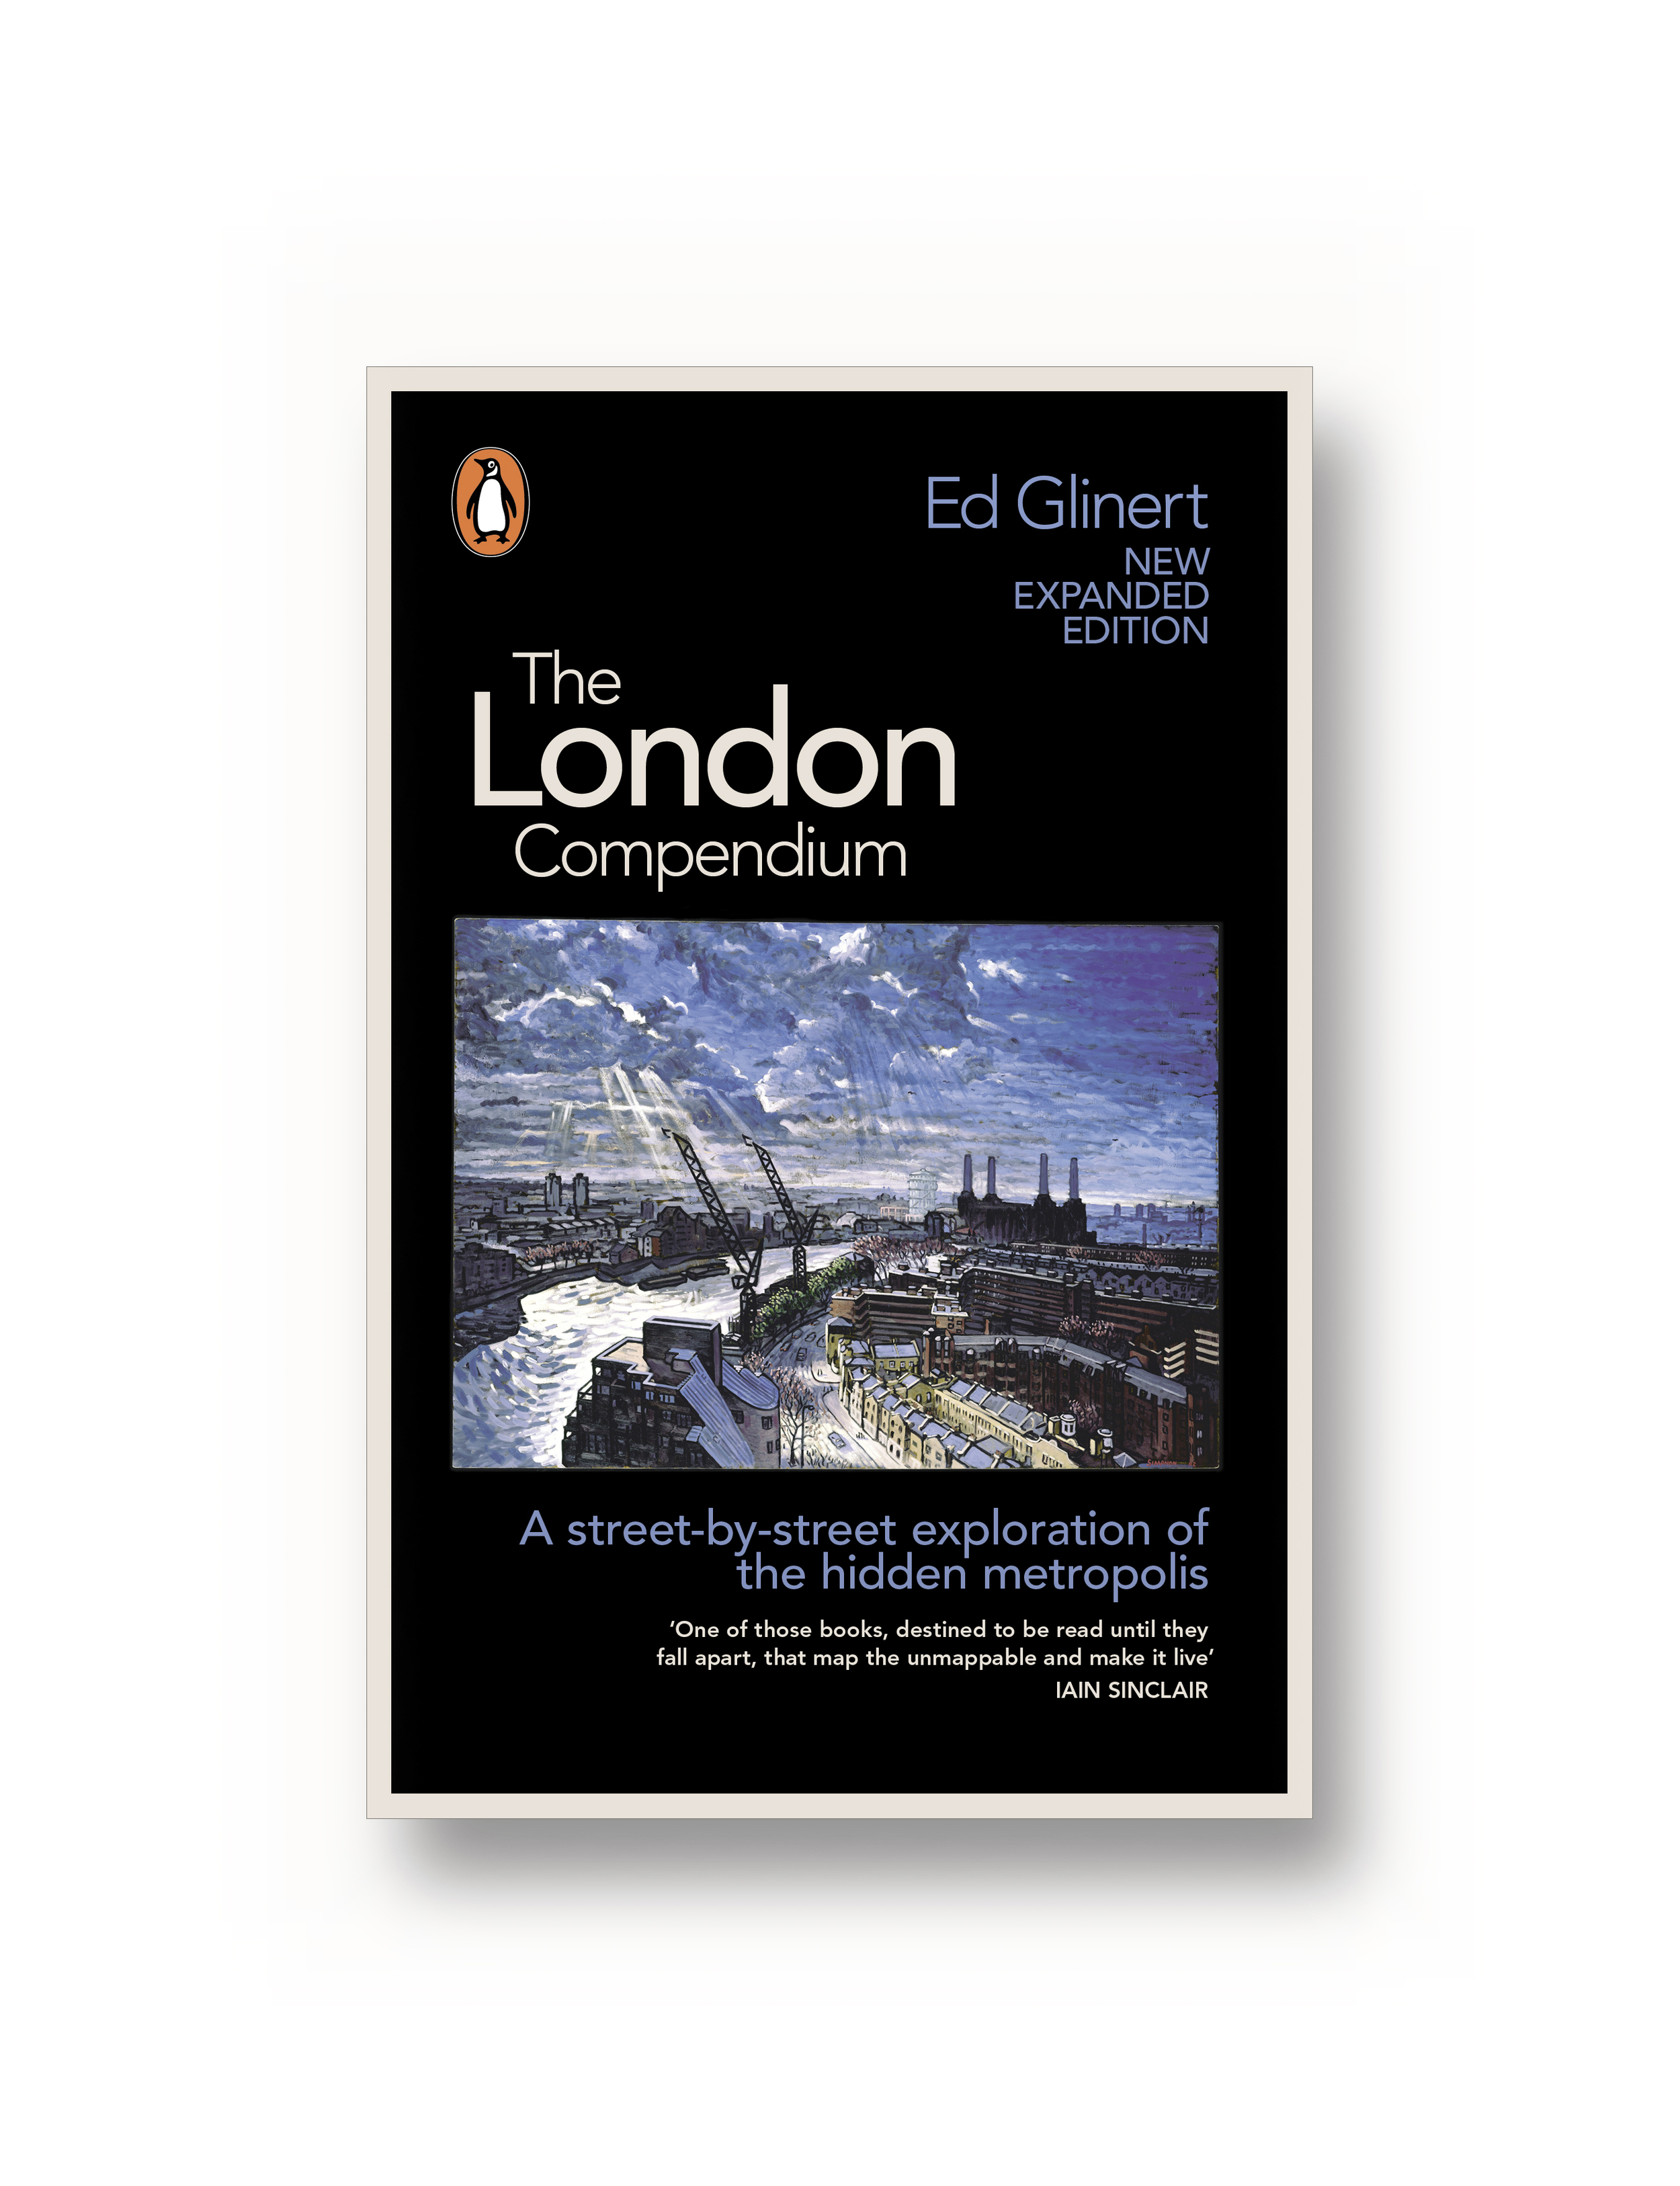  The London Compendium by Ed Gilbert - Cover art: Paul Simonon Design: Jim Stoddart  